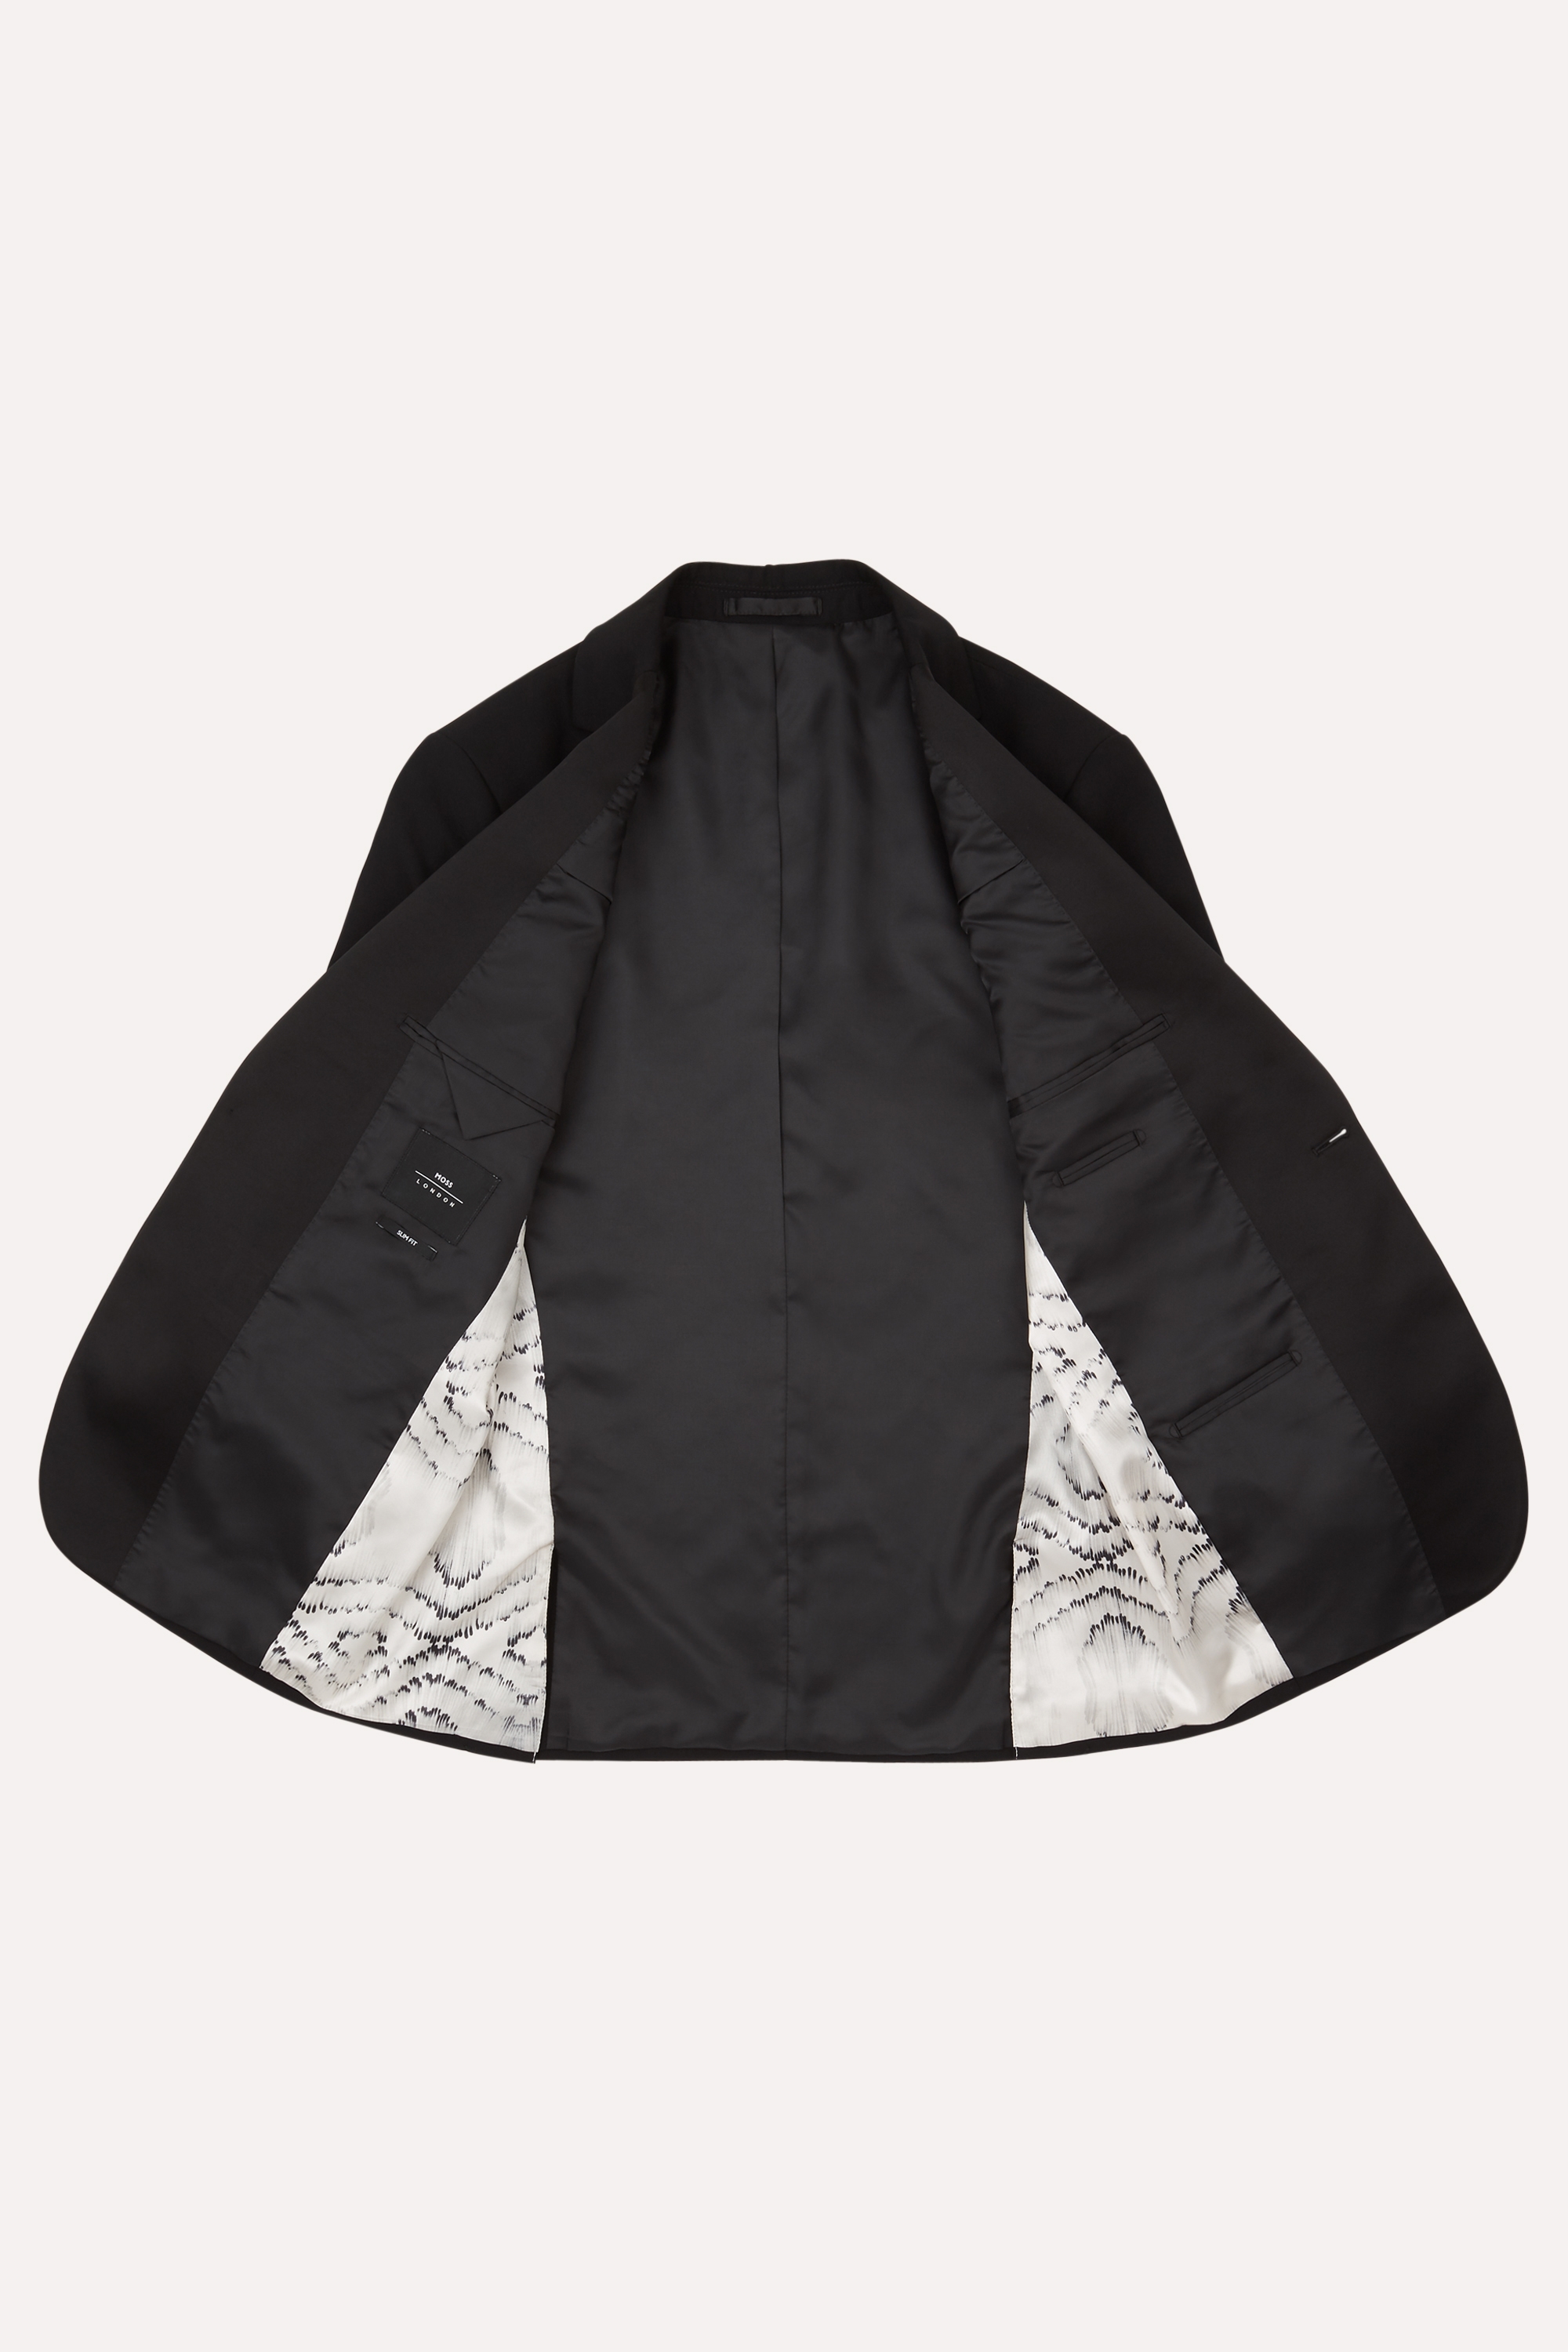 Slim Fit Black Tuxedo Jacket | Buy Online at Moss